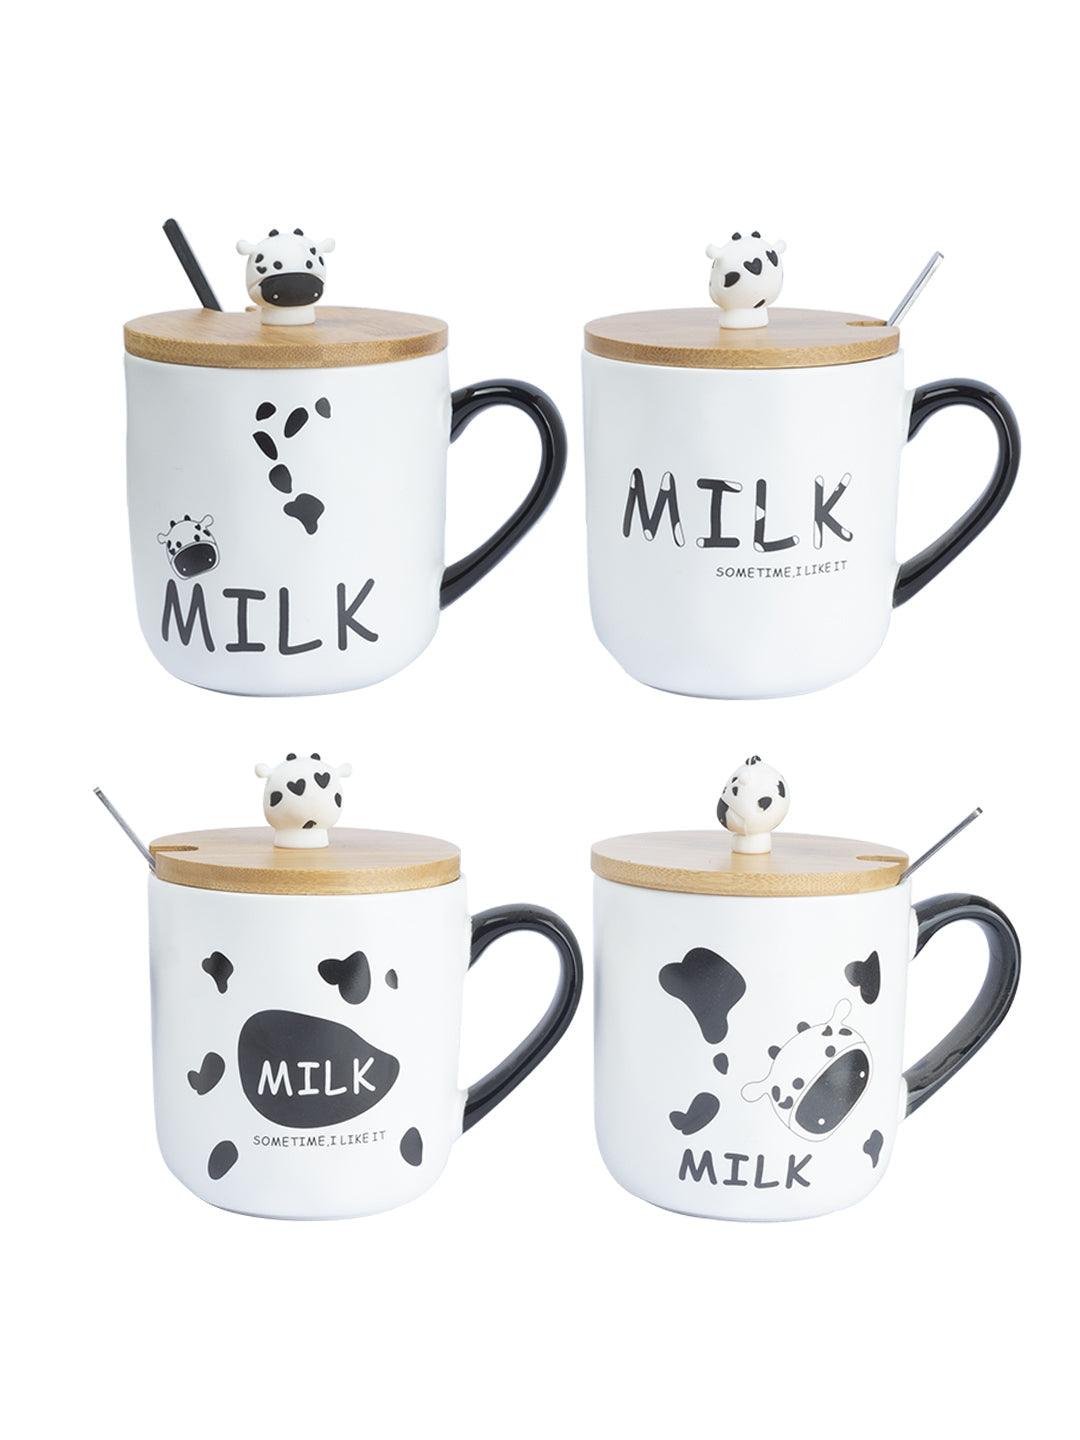 "MILK" Coffee Mug With Lid -  450mL, Mixing Spoon